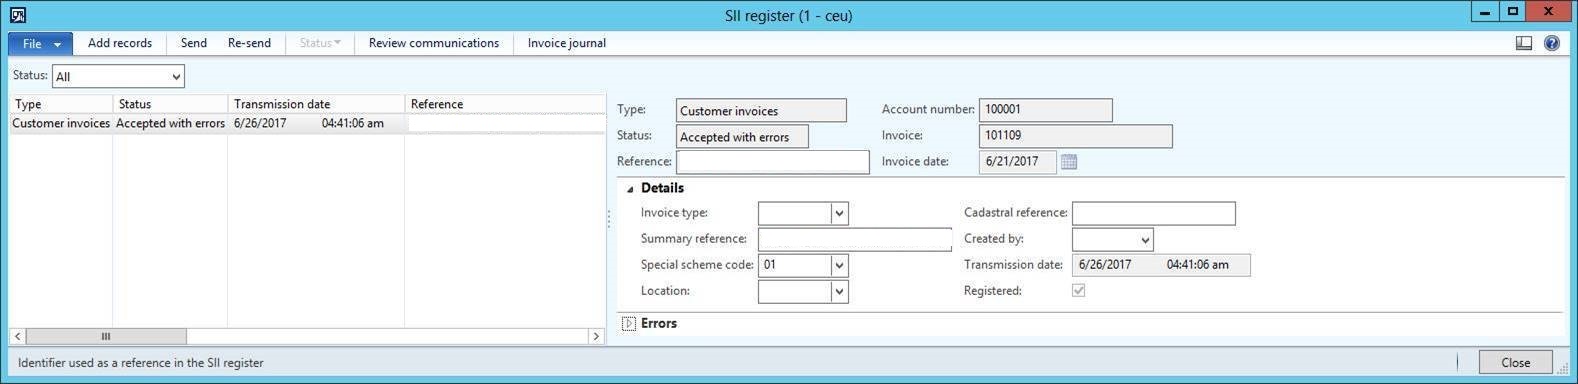 Счета клиента регистрации SII